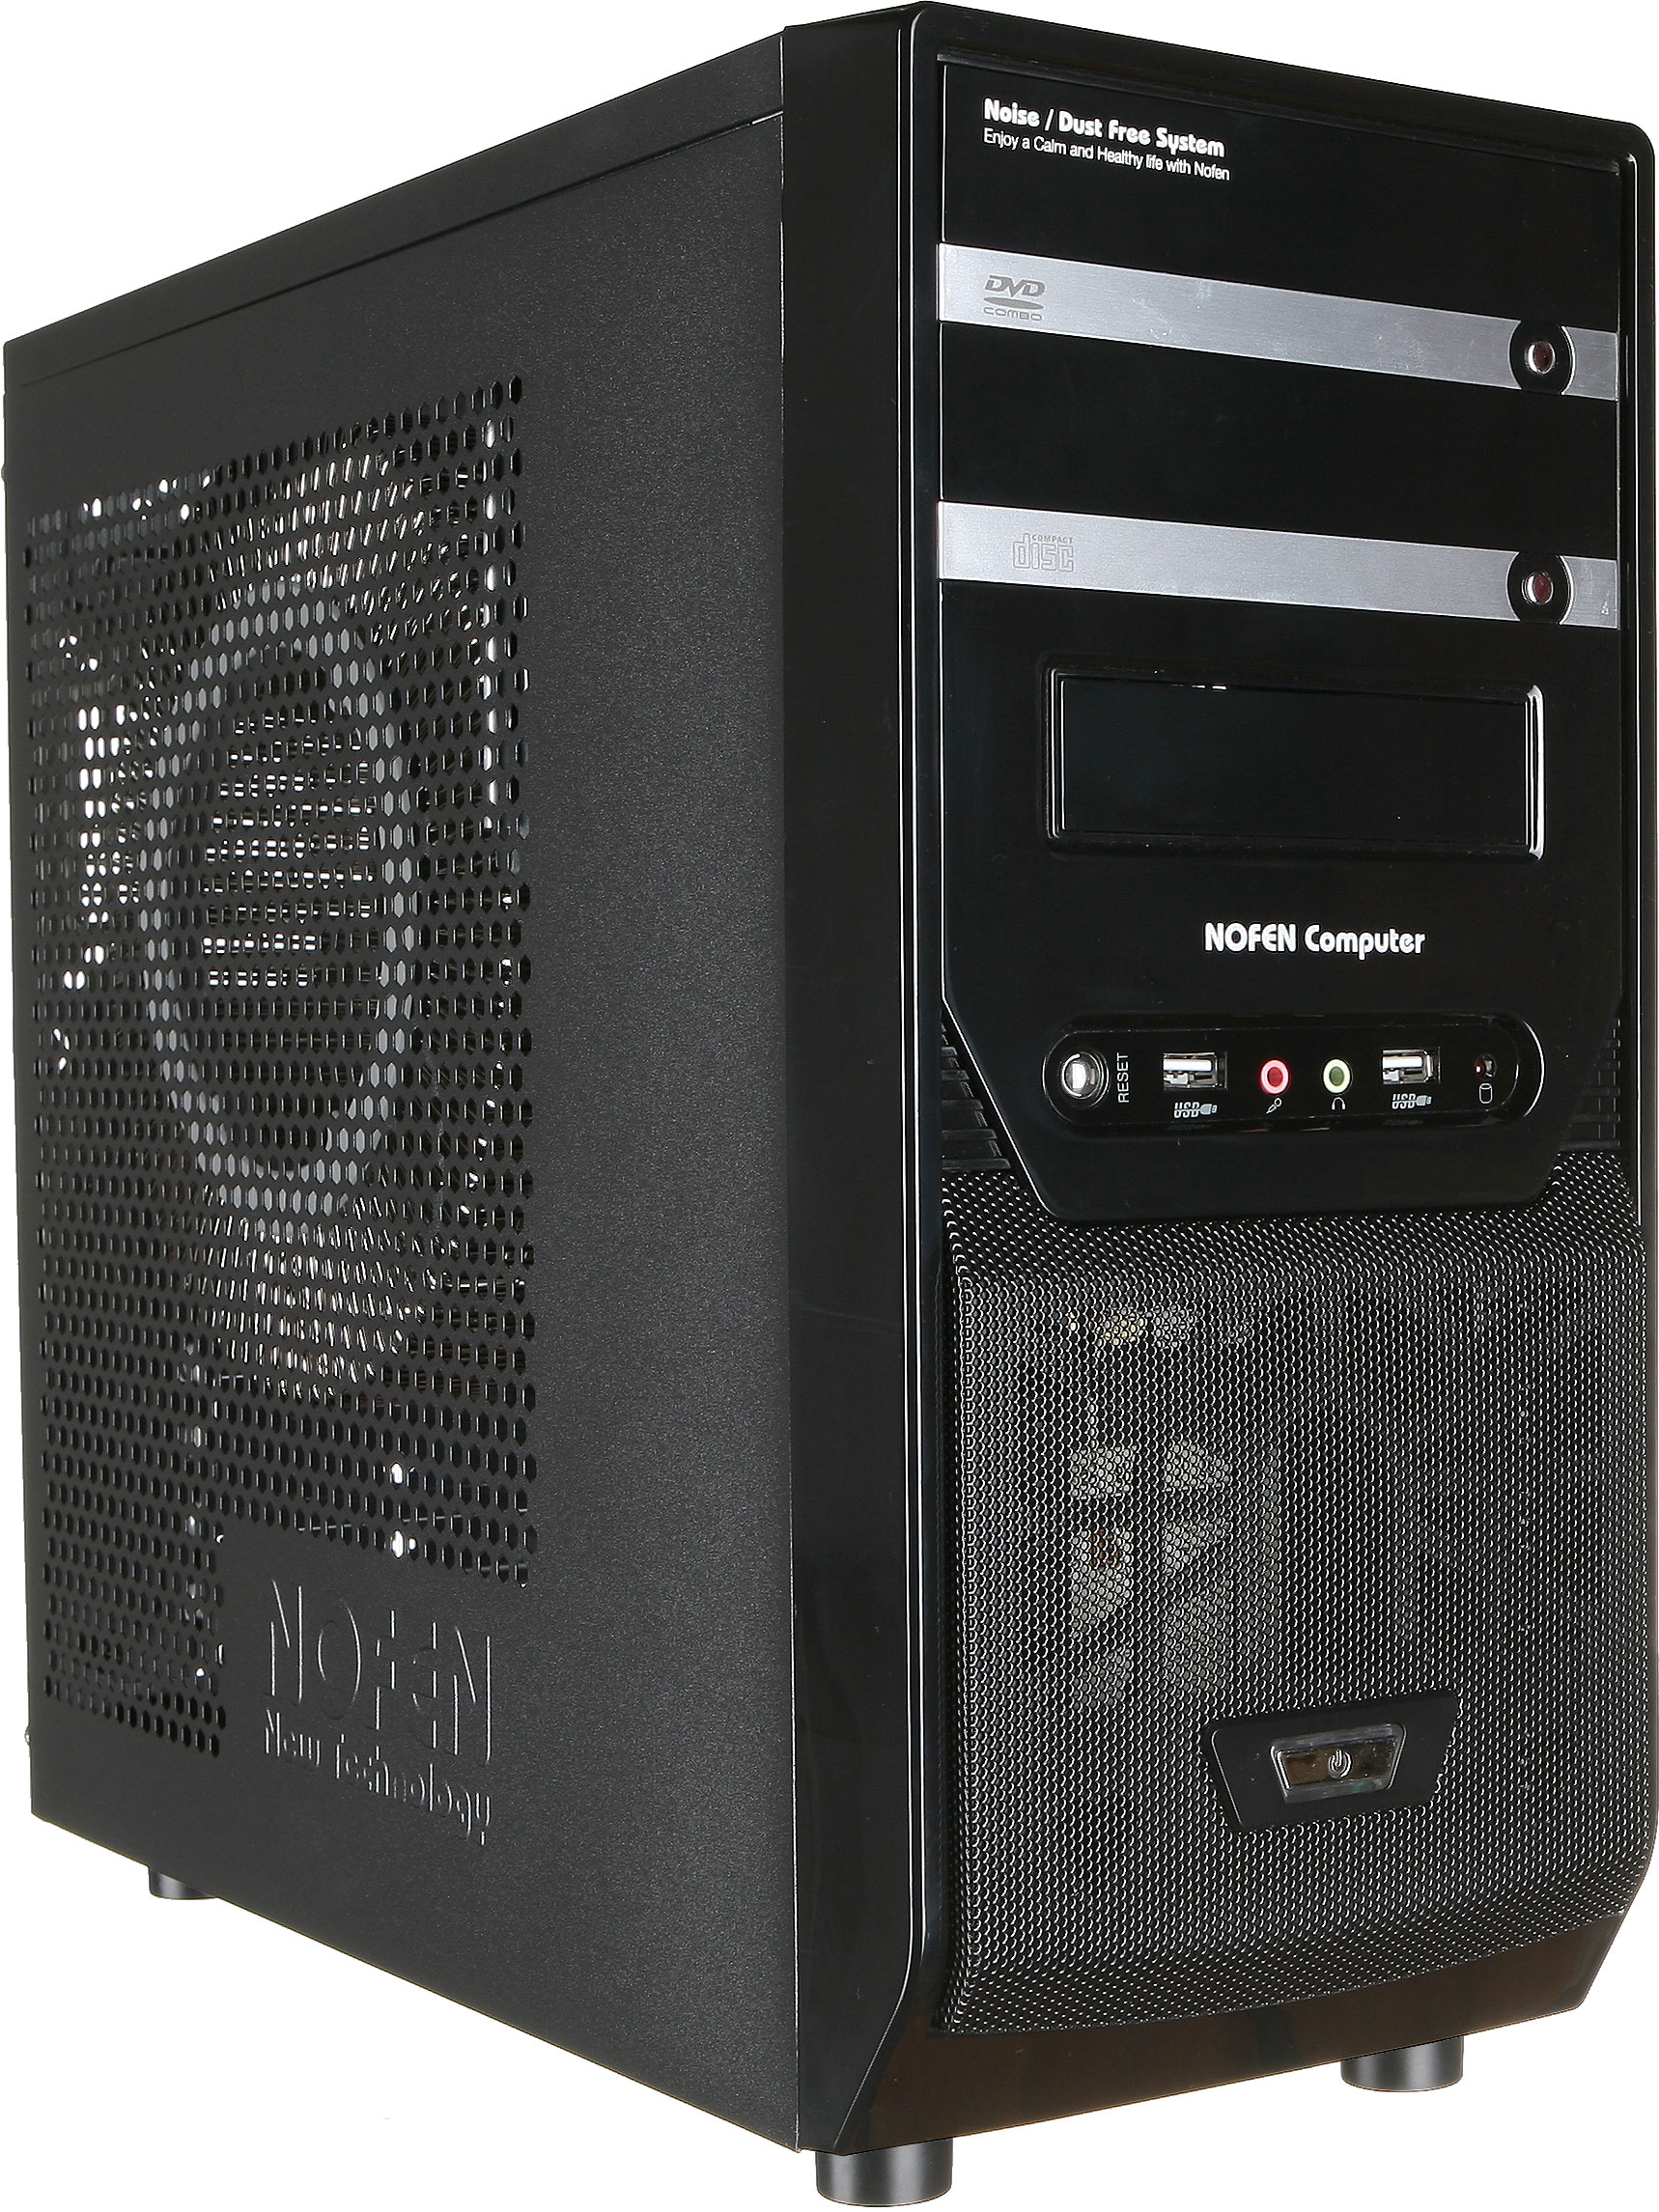 SET-A40 Fanless Bundle: CS-30 Case, 400W PSU and CPU Cooler